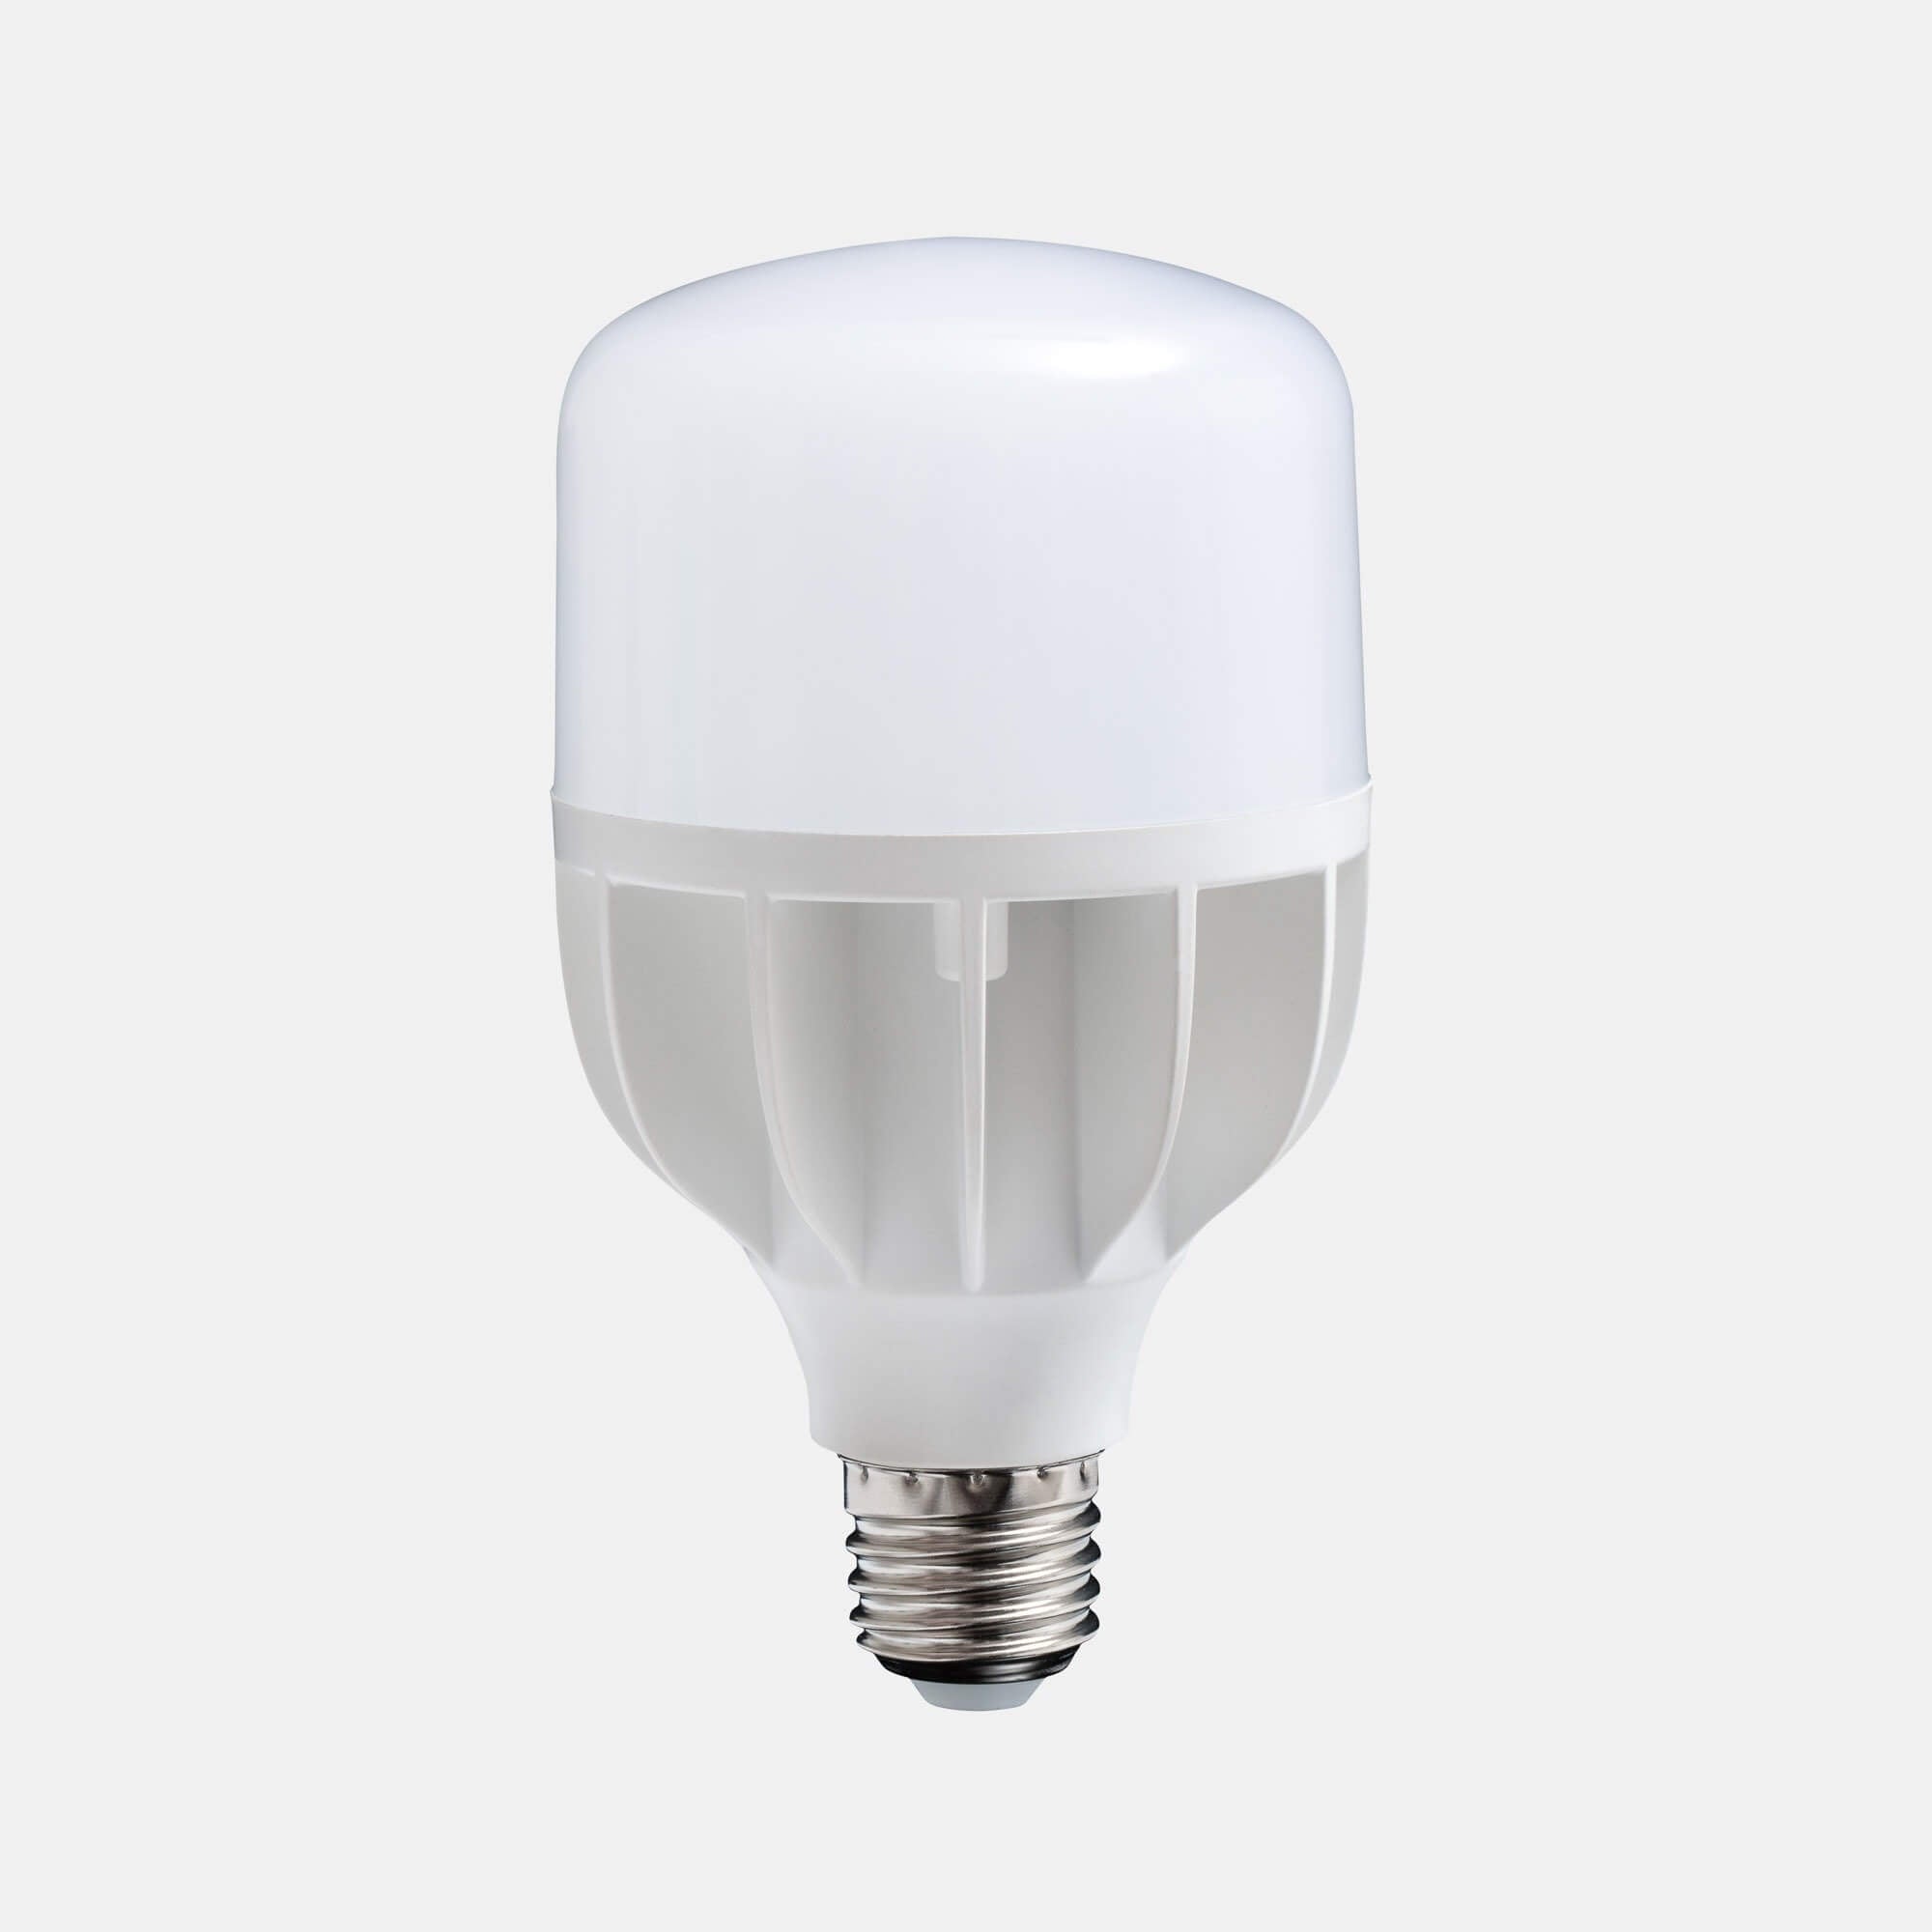 18W energy saving daylight bulb (Screw Fitting)